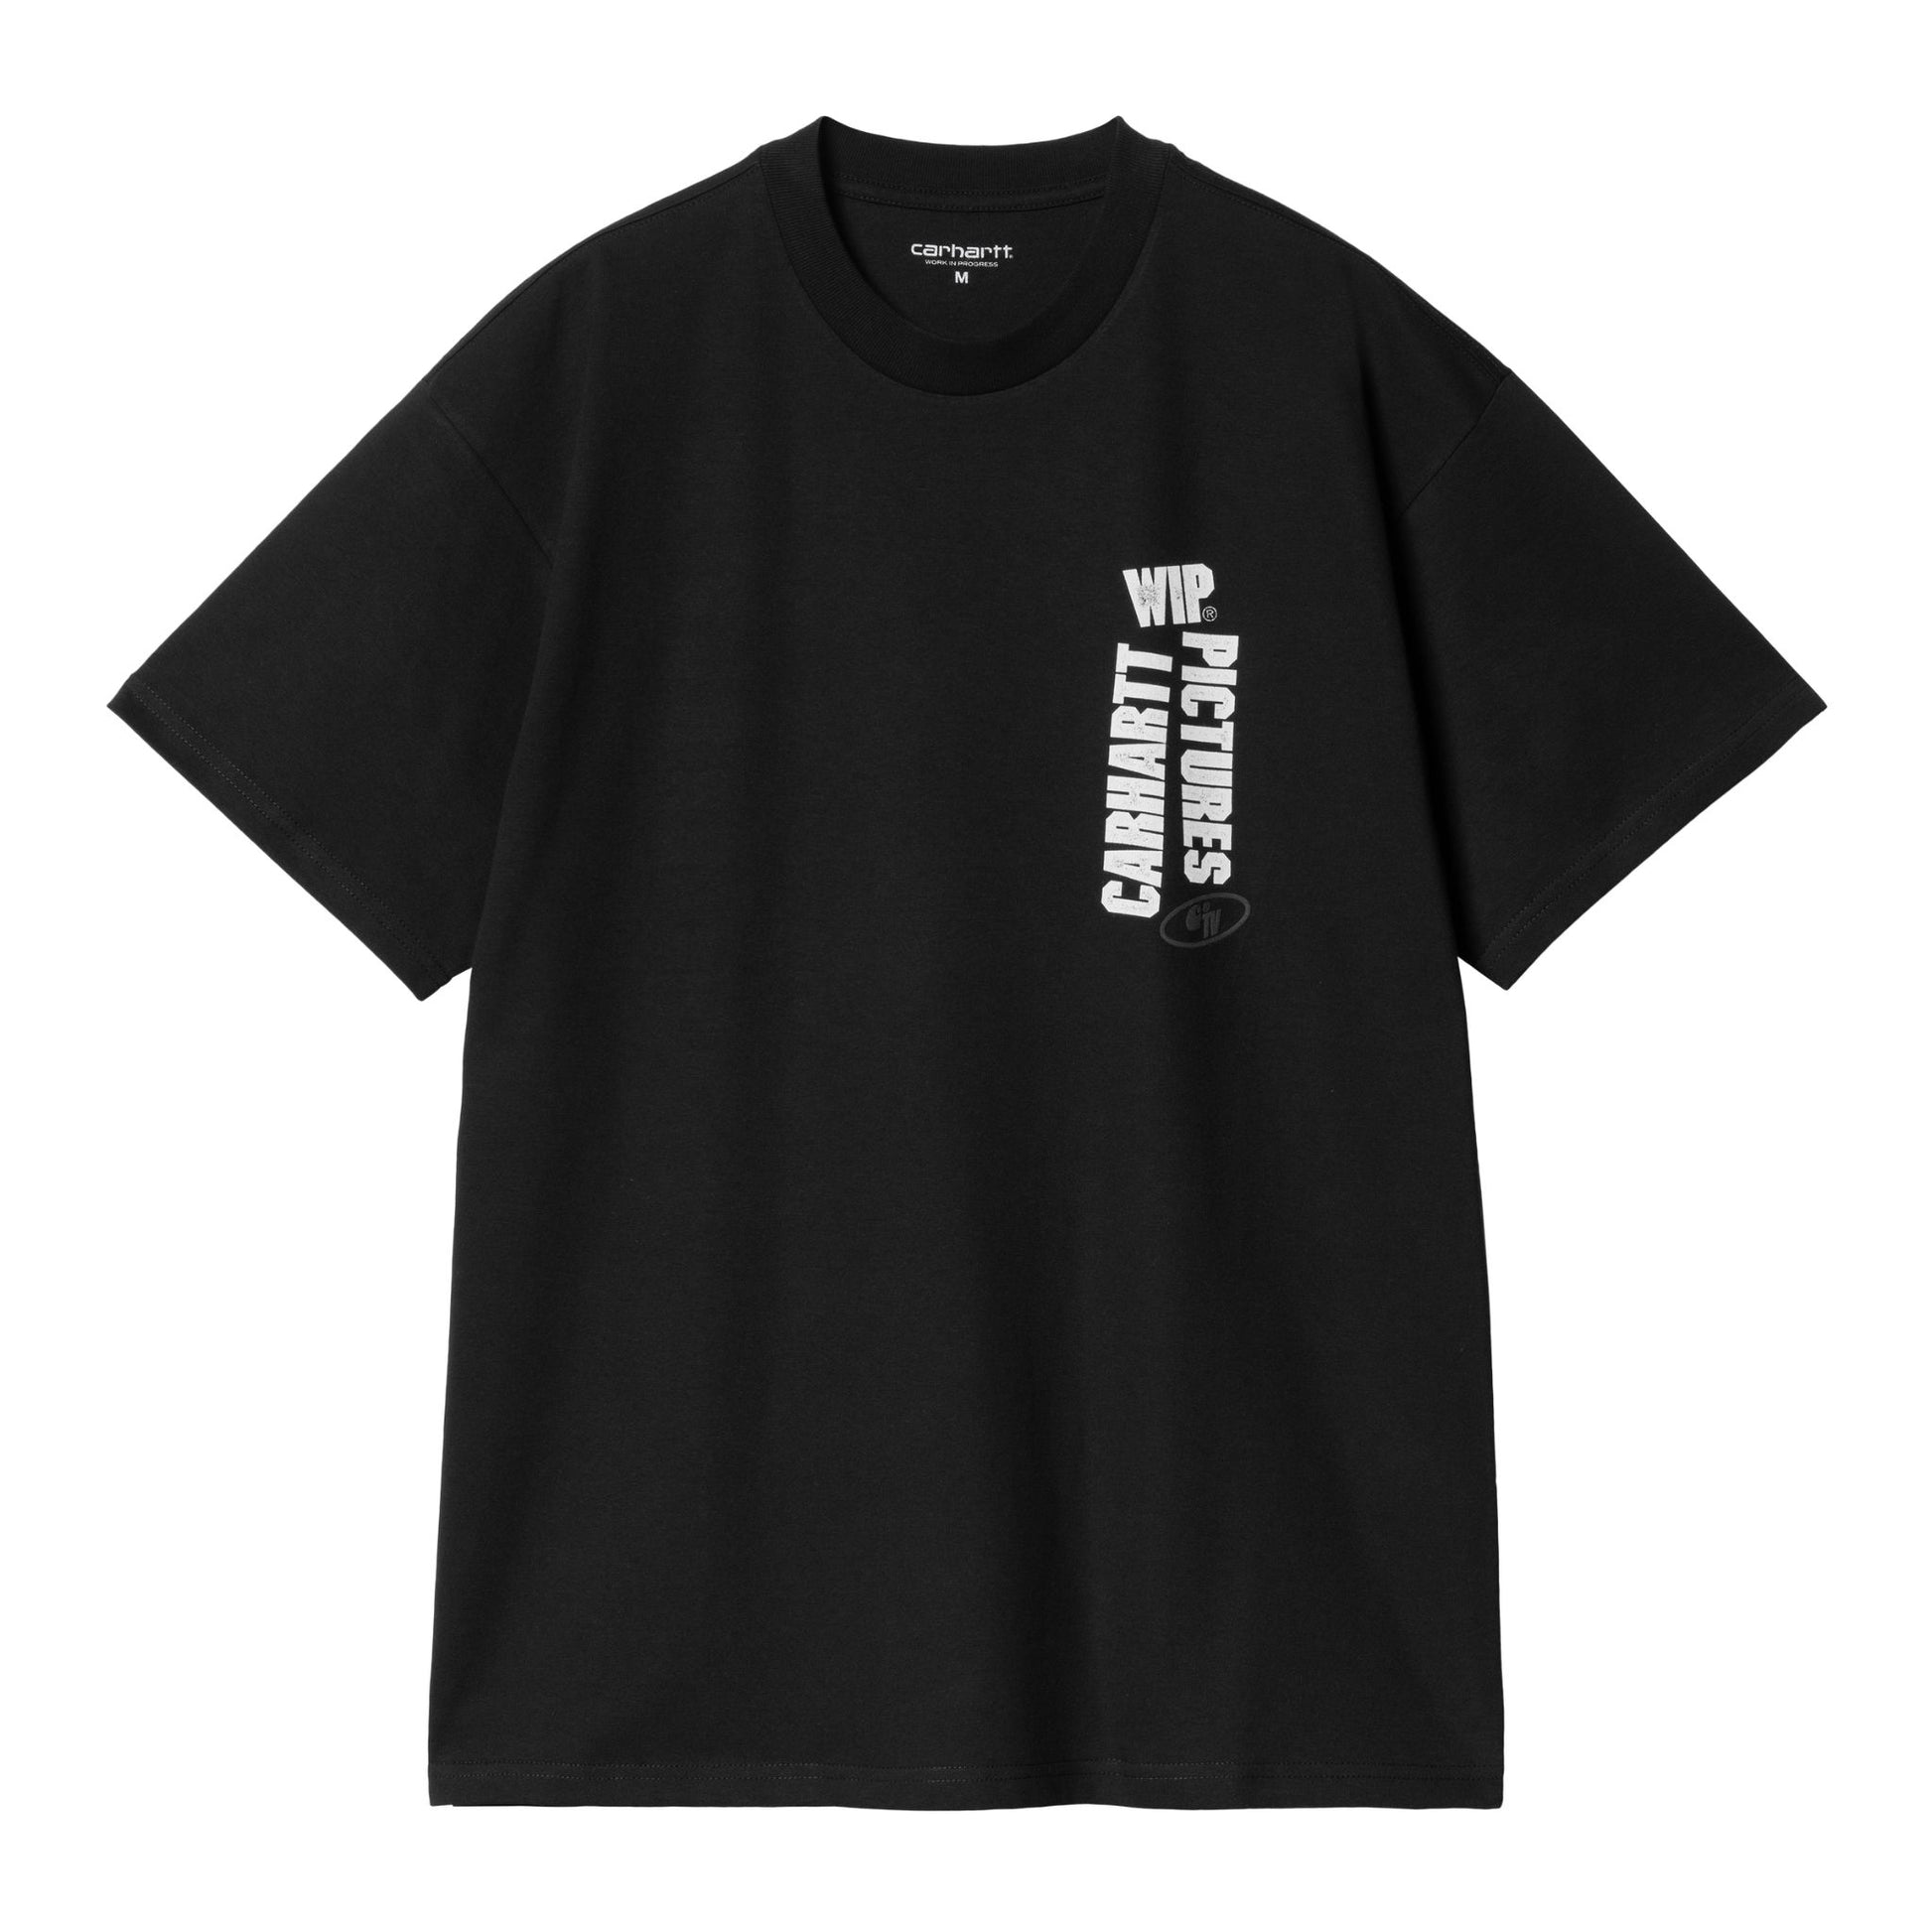 Carhartt WIP Short Sleeve Pictures T-Shirt Black. Foto da parte de trás.